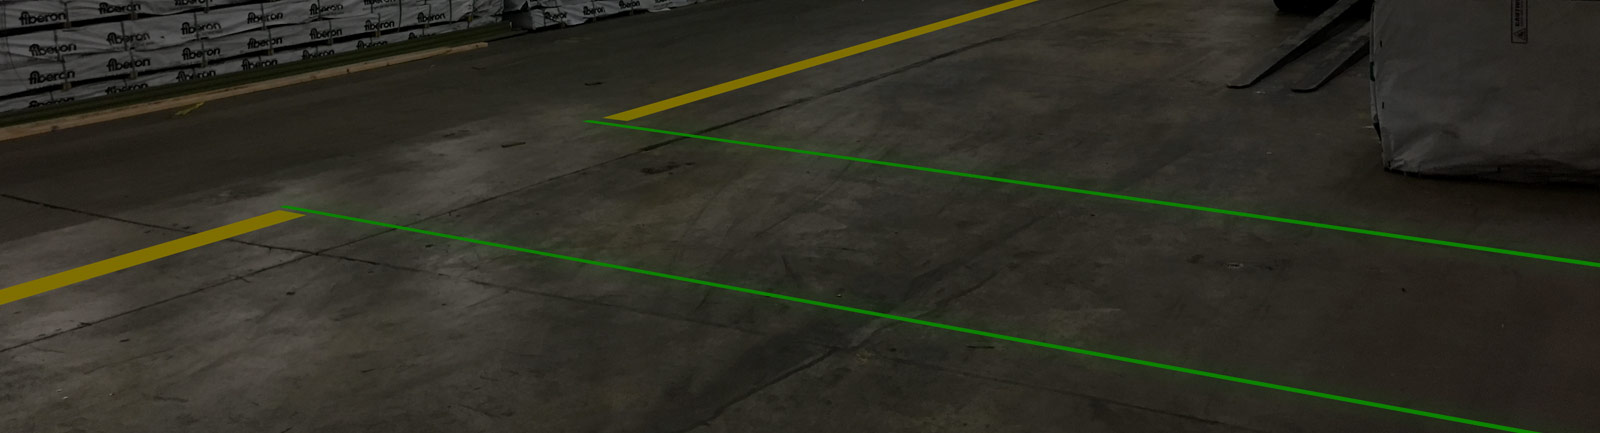 Industrial Floor Marking via Laser Projector - Delta Lasers Technology